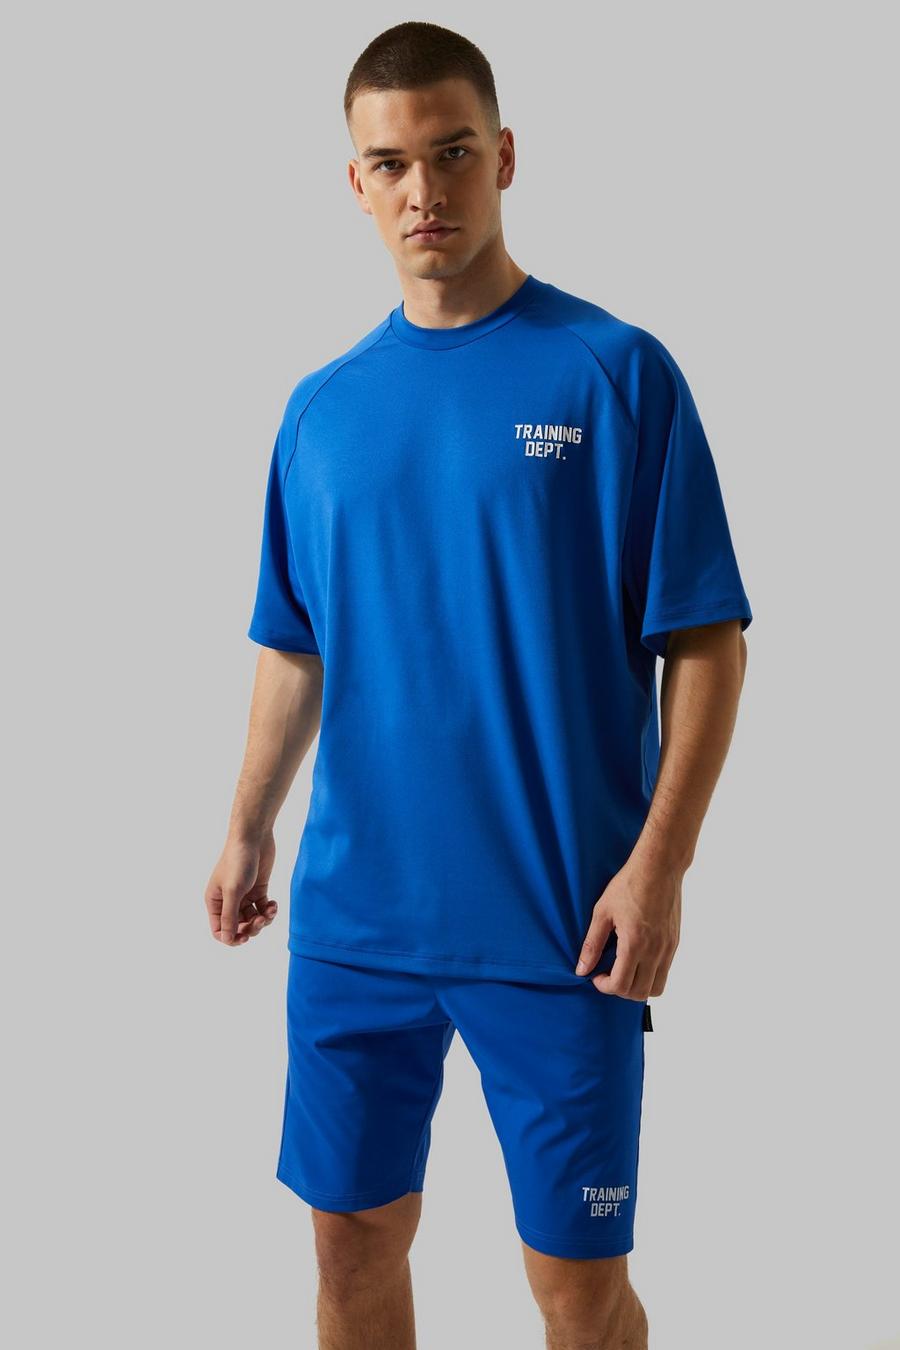 Cobalt blå Tall MAN Active Training Dept T-shirt i boxig modell